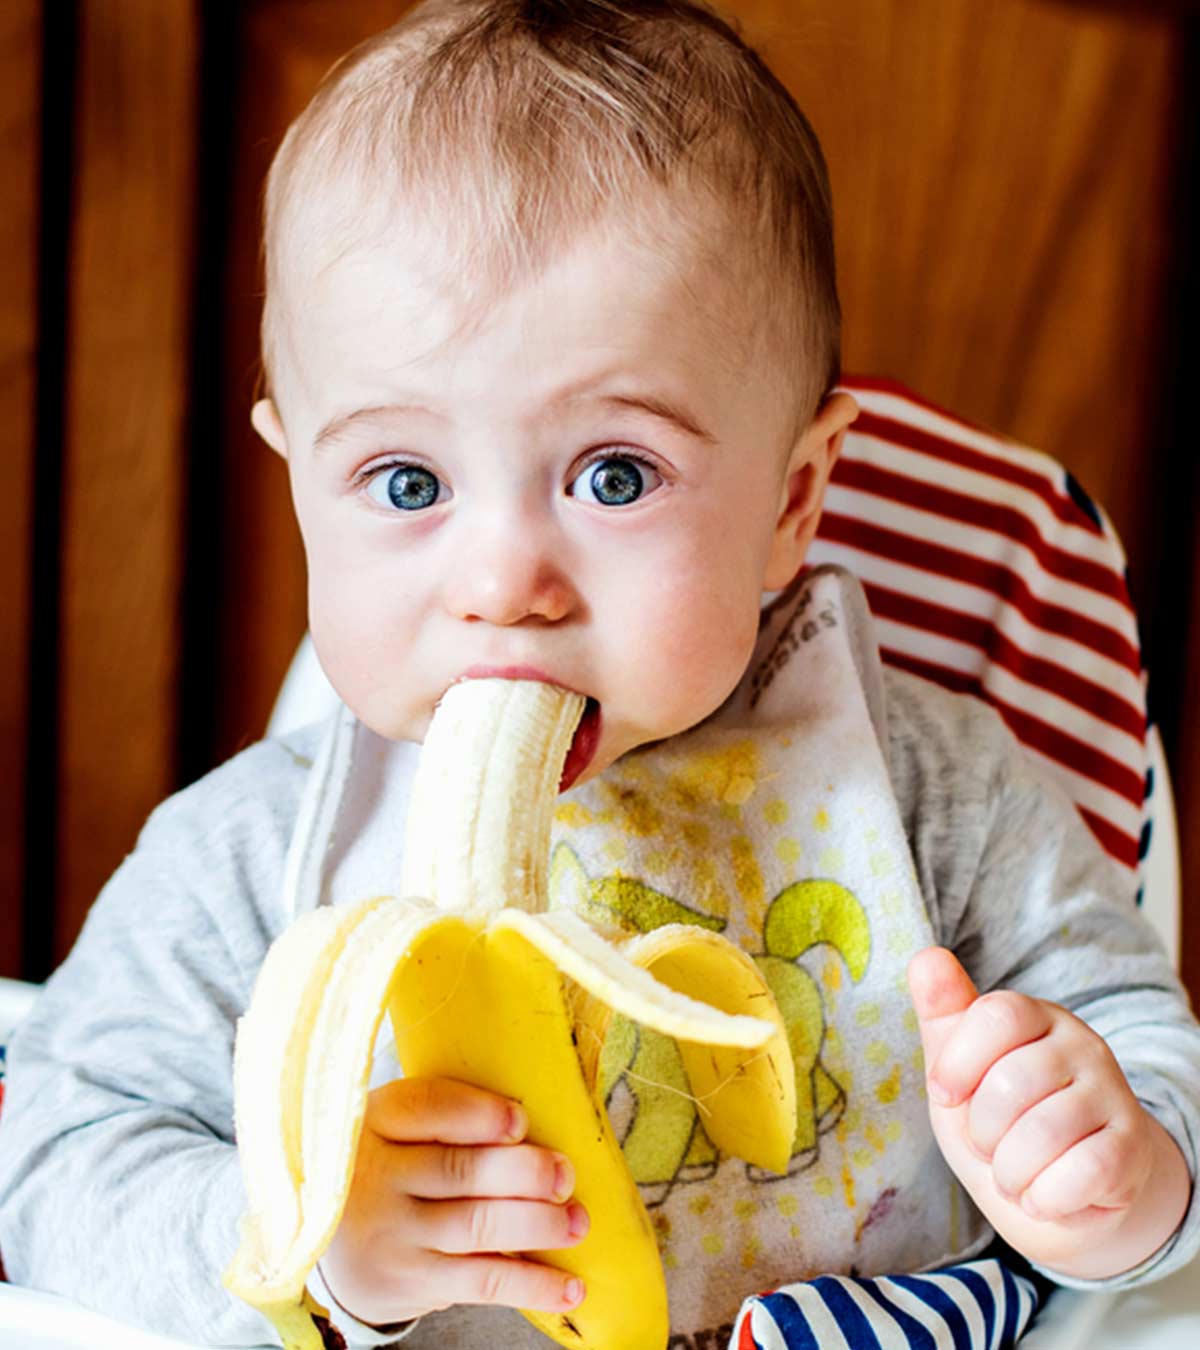 Banana For Babies: Benefits, Precautions, & 8 Recipes To Try